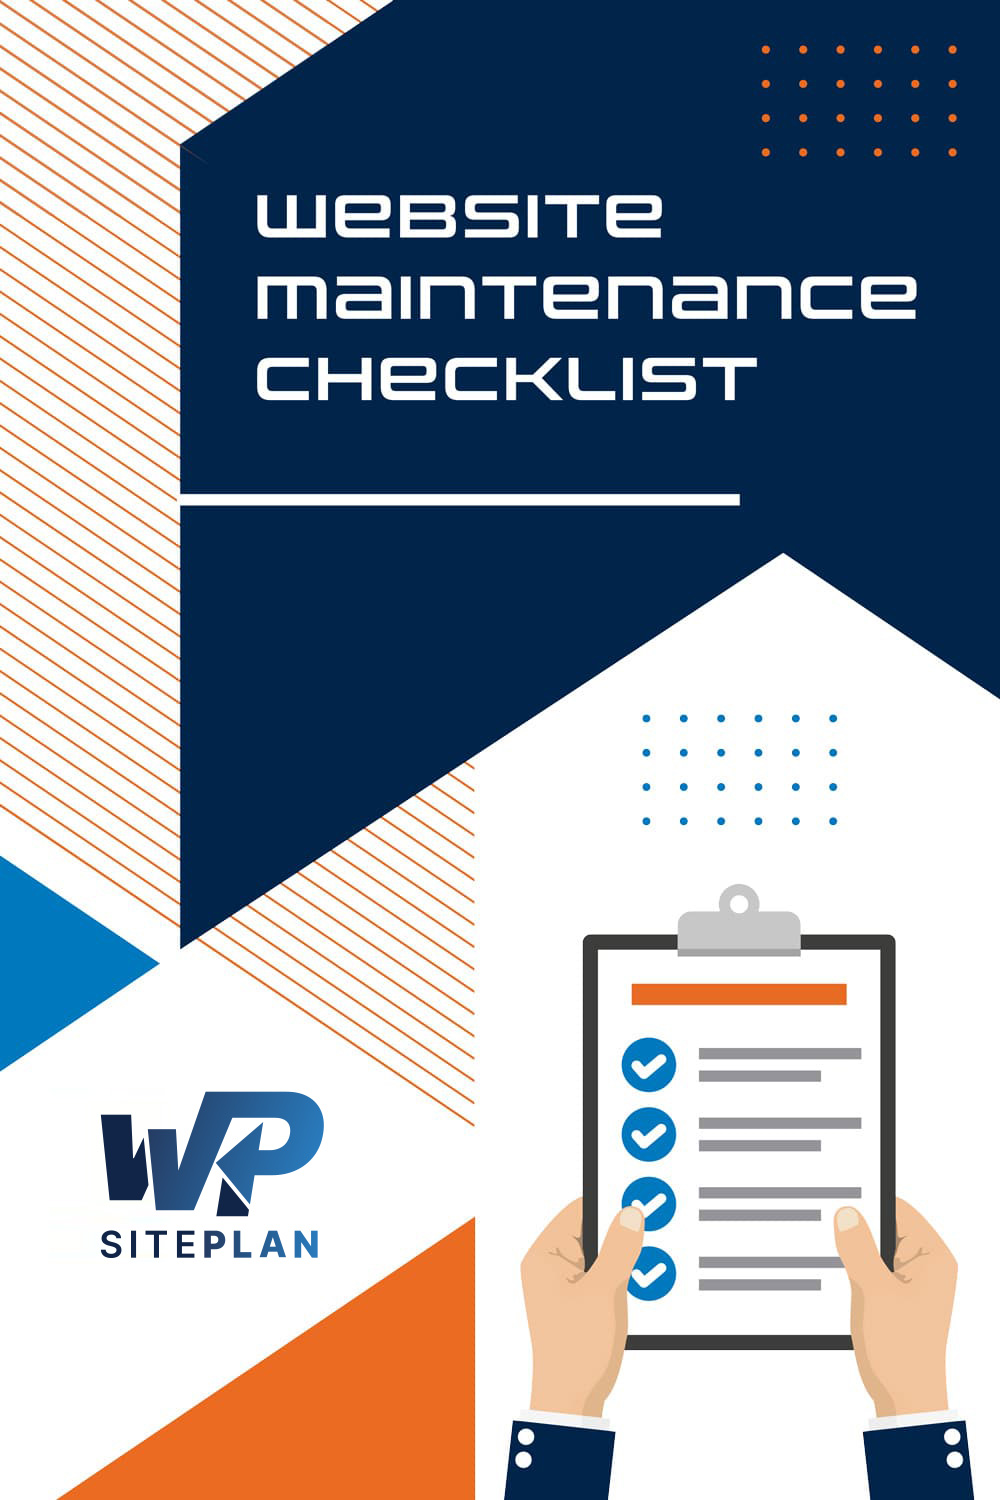 WordPress Websites maintenance checklist image.